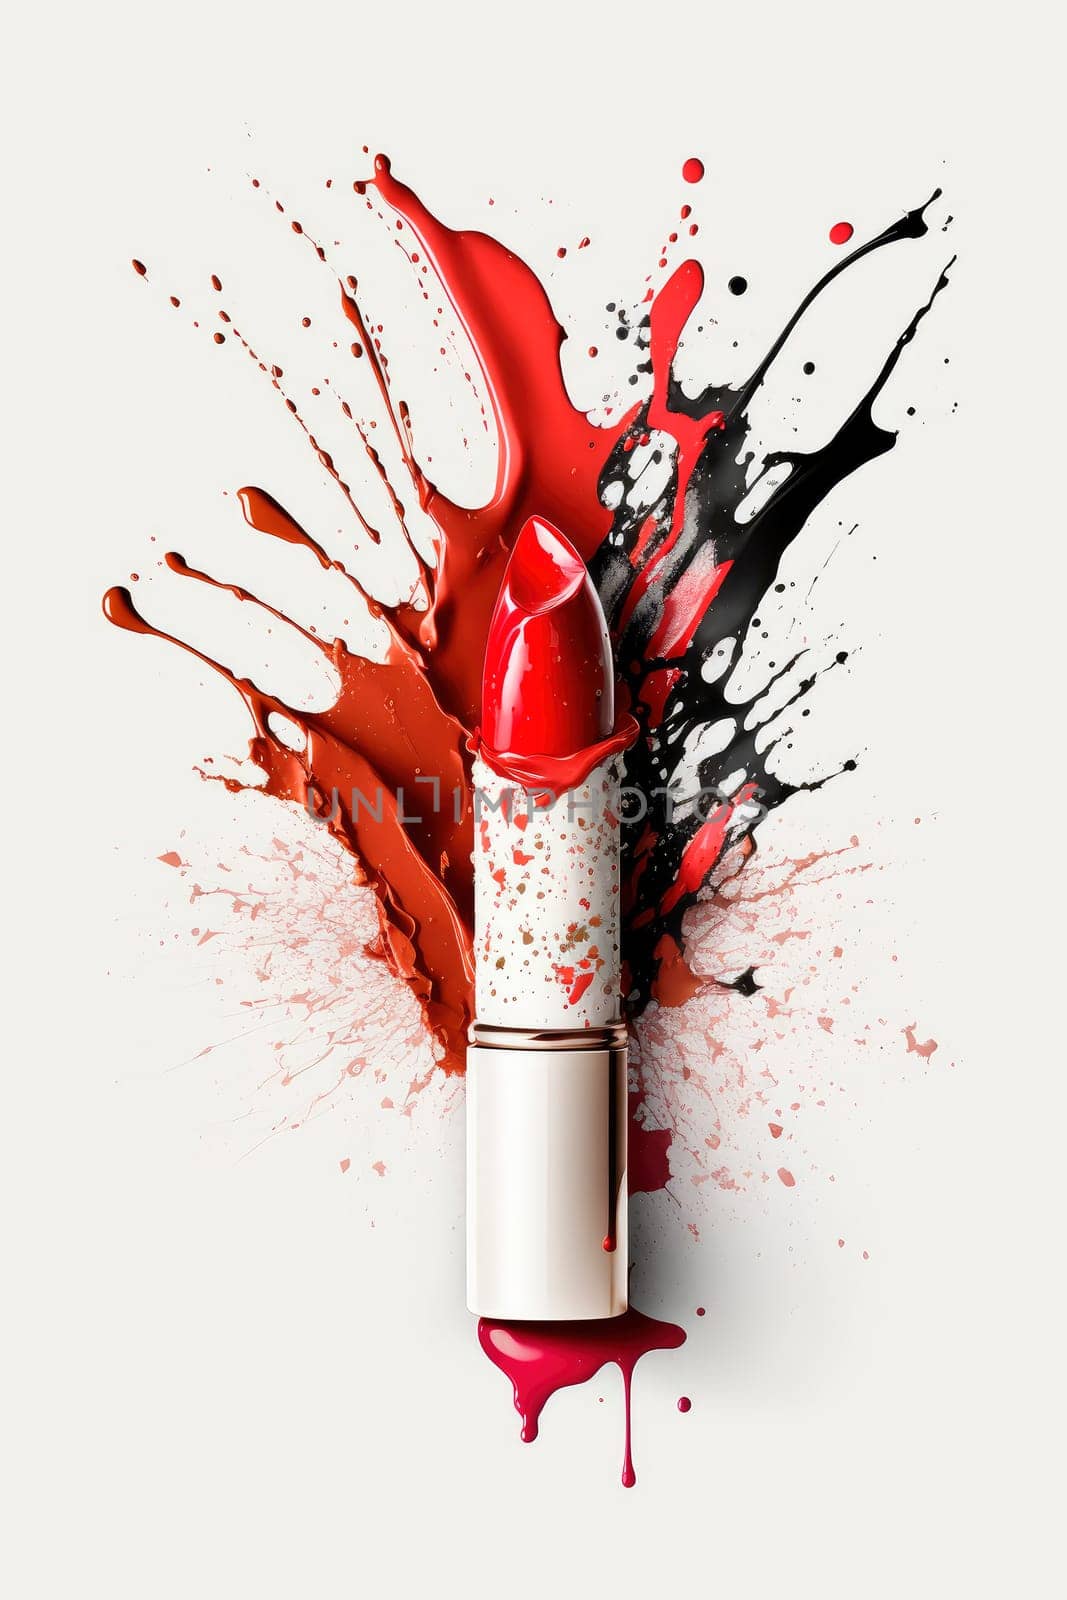 Lipstick splash cosmetics isolate on white background. by yanadjana